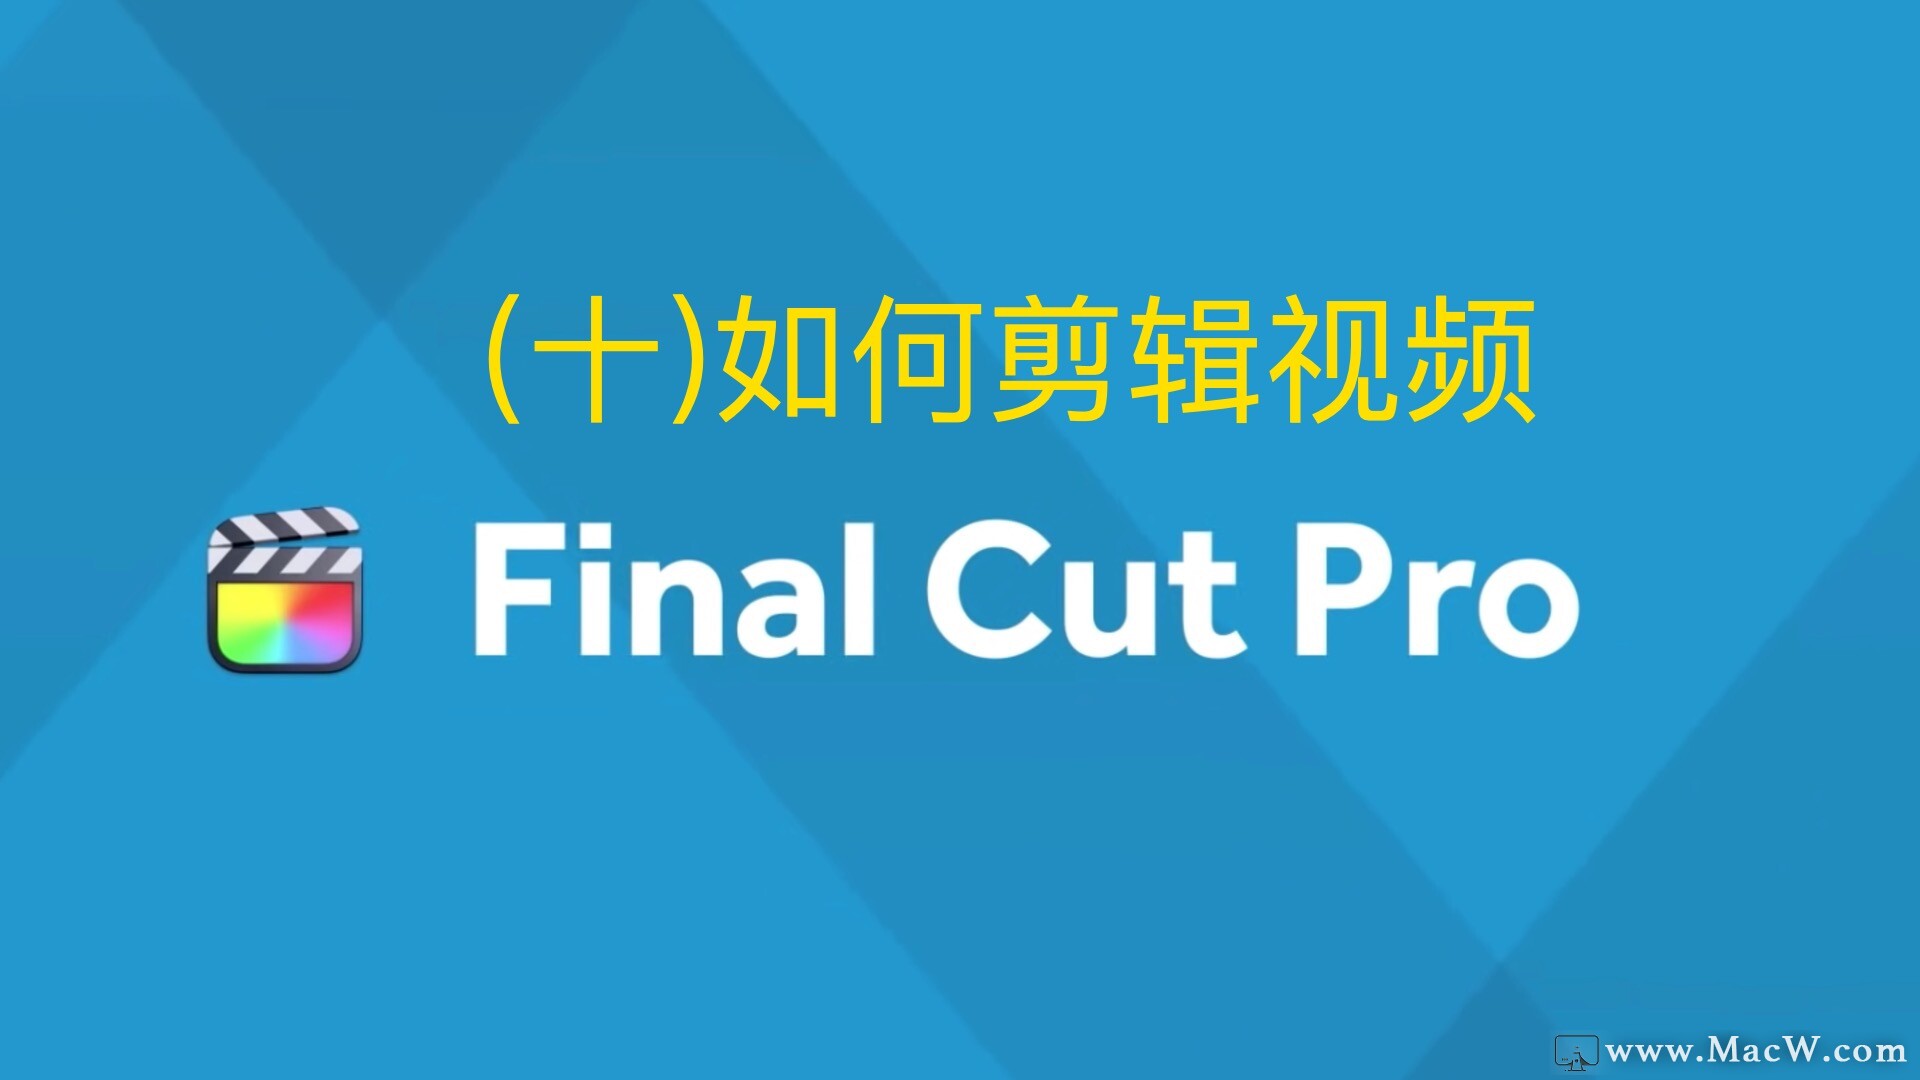 Final Cut Pro中文教程 (10)如何剪辑视频 - 图1